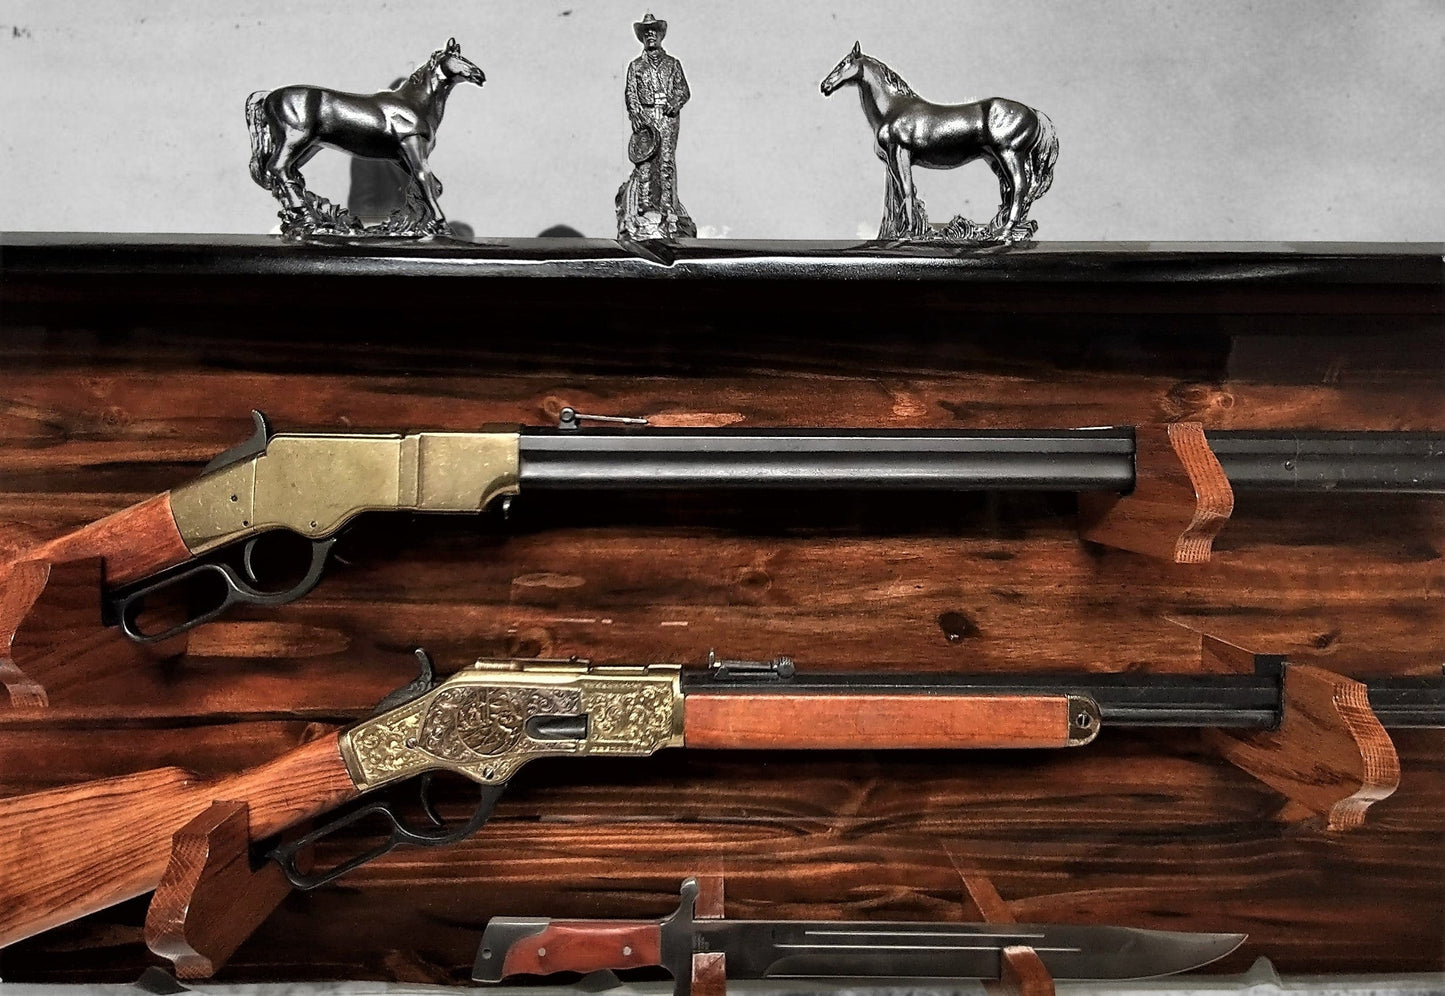 walkerwoodgifts gun rack 2 Place Lever Action with Knife Display, Rifle Shotgun Rack, Western Cabin Decor